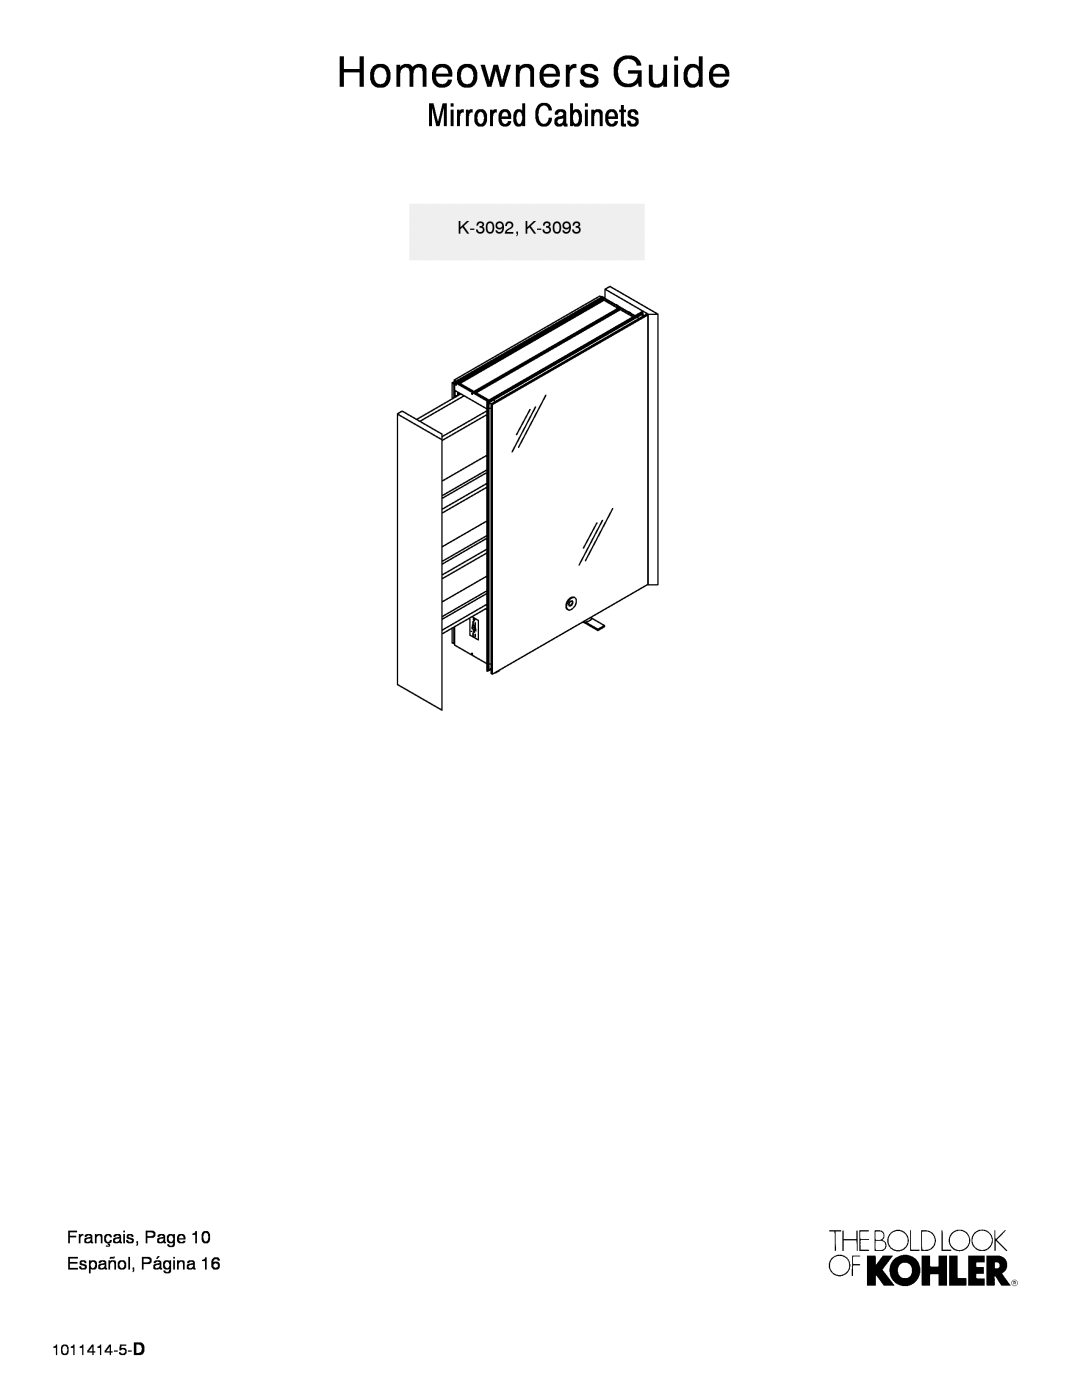 Kohler manual Homeowners Guide, Mirrored Cabinets, K-3092, K-3093 Français, Page Español, Página, 1011414-5-D 